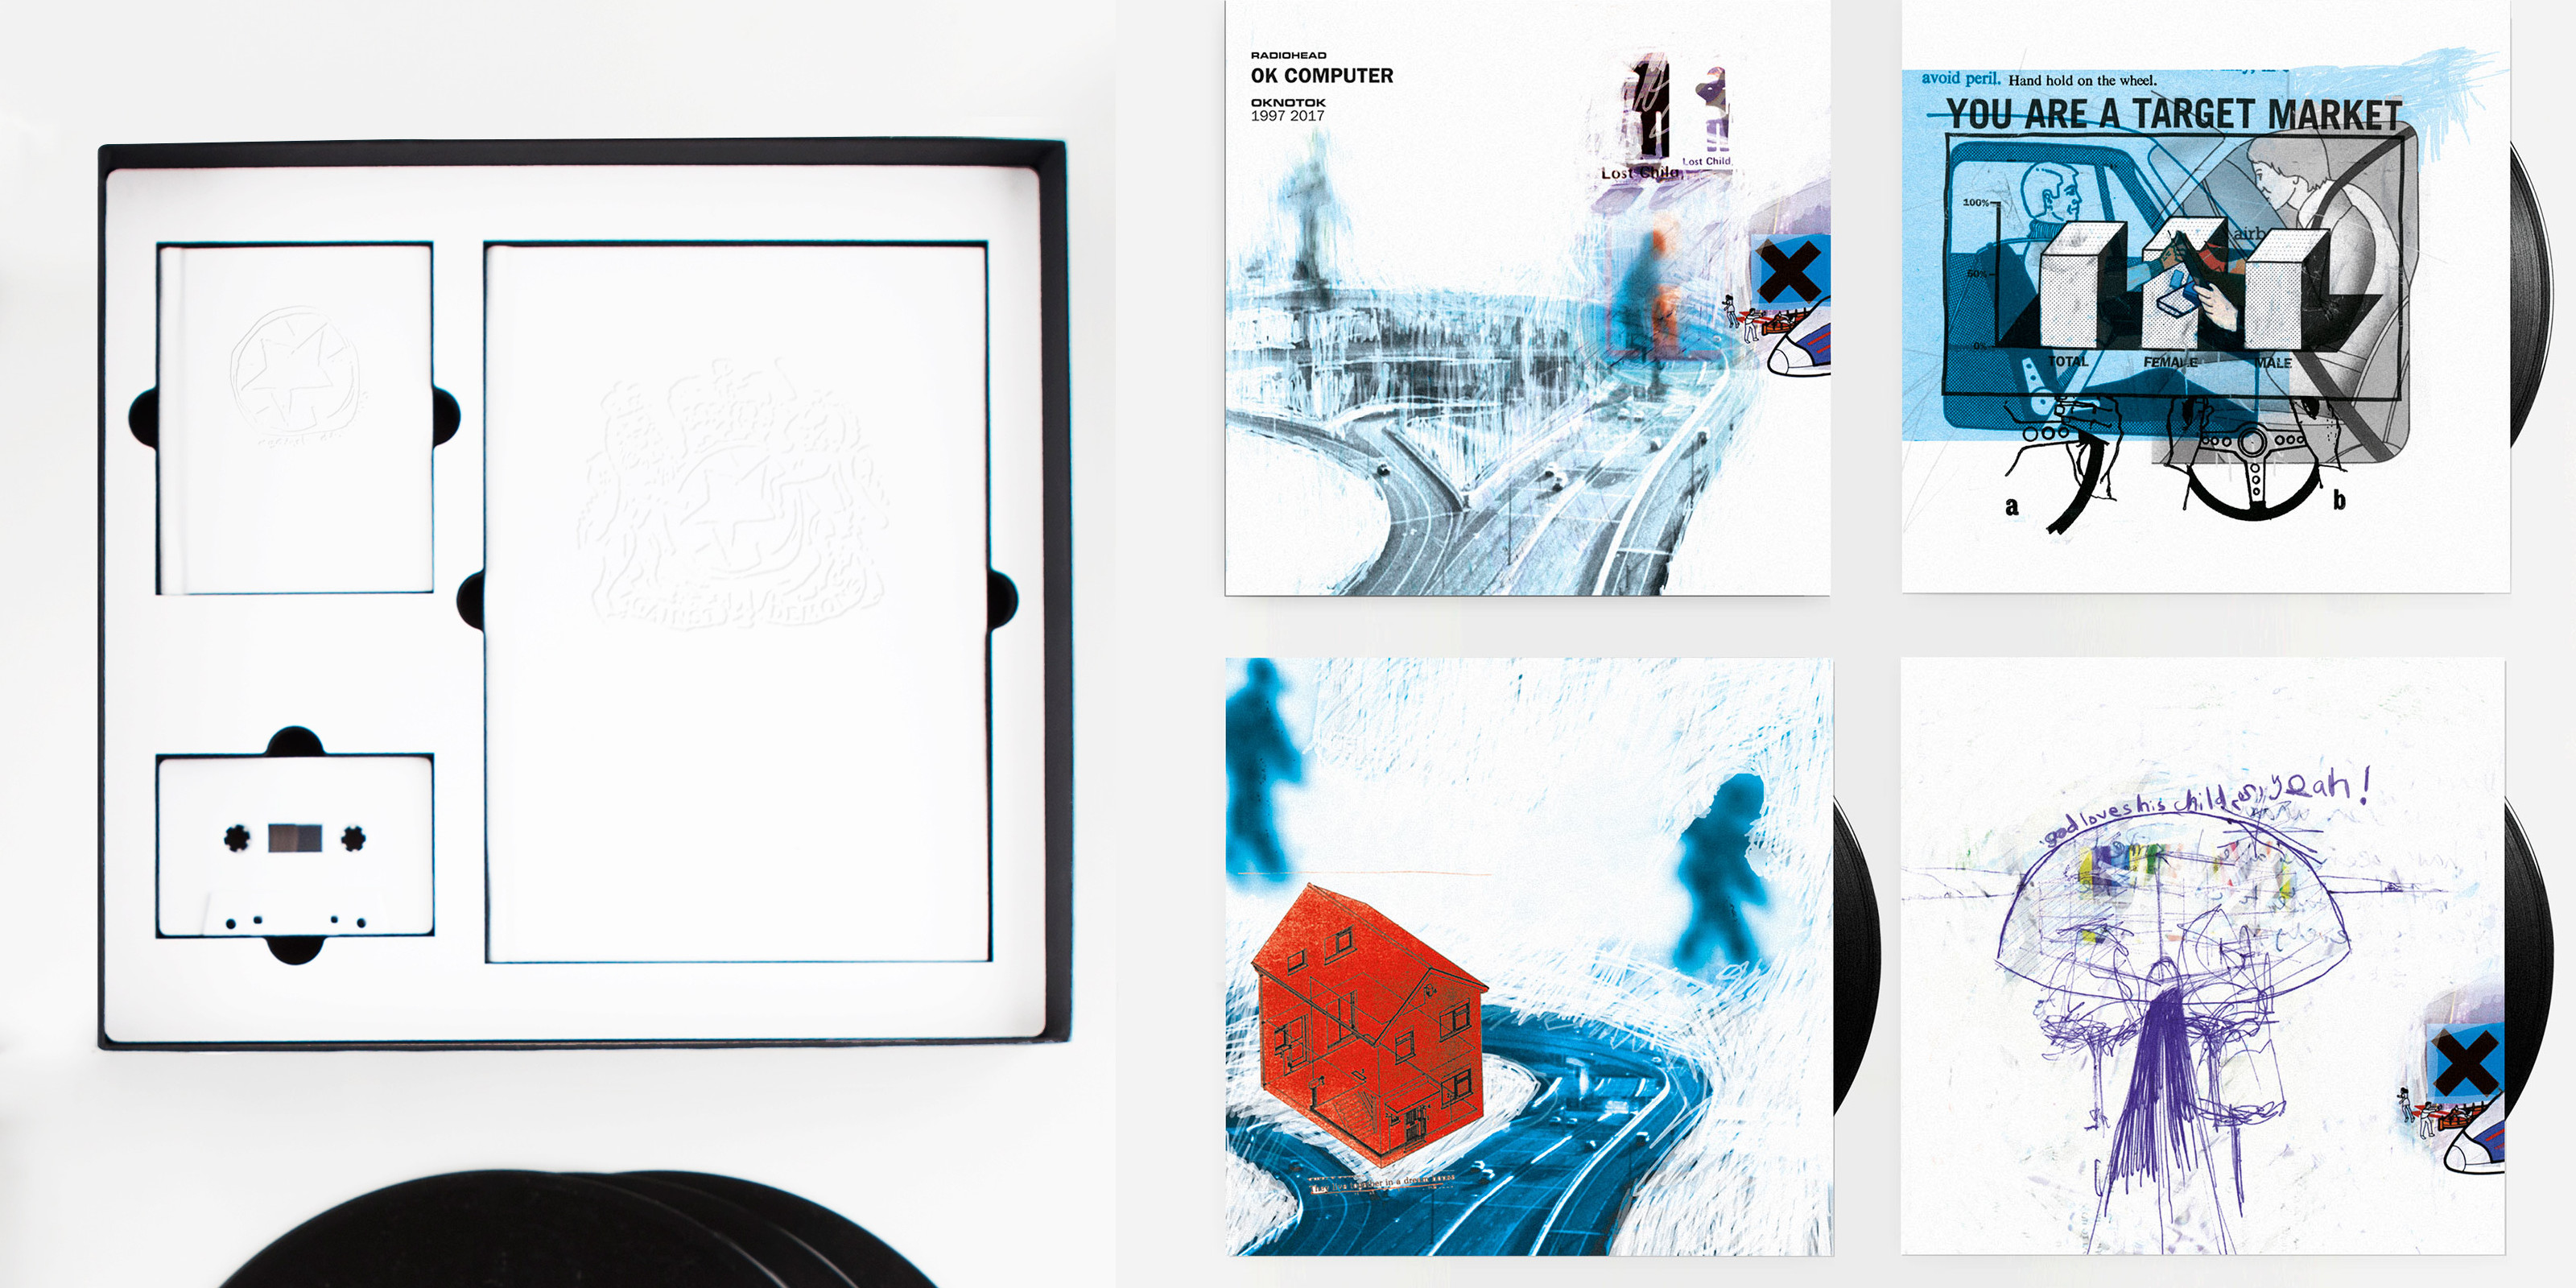 Radiohead · Ok Computer [Collectors Series (CD)